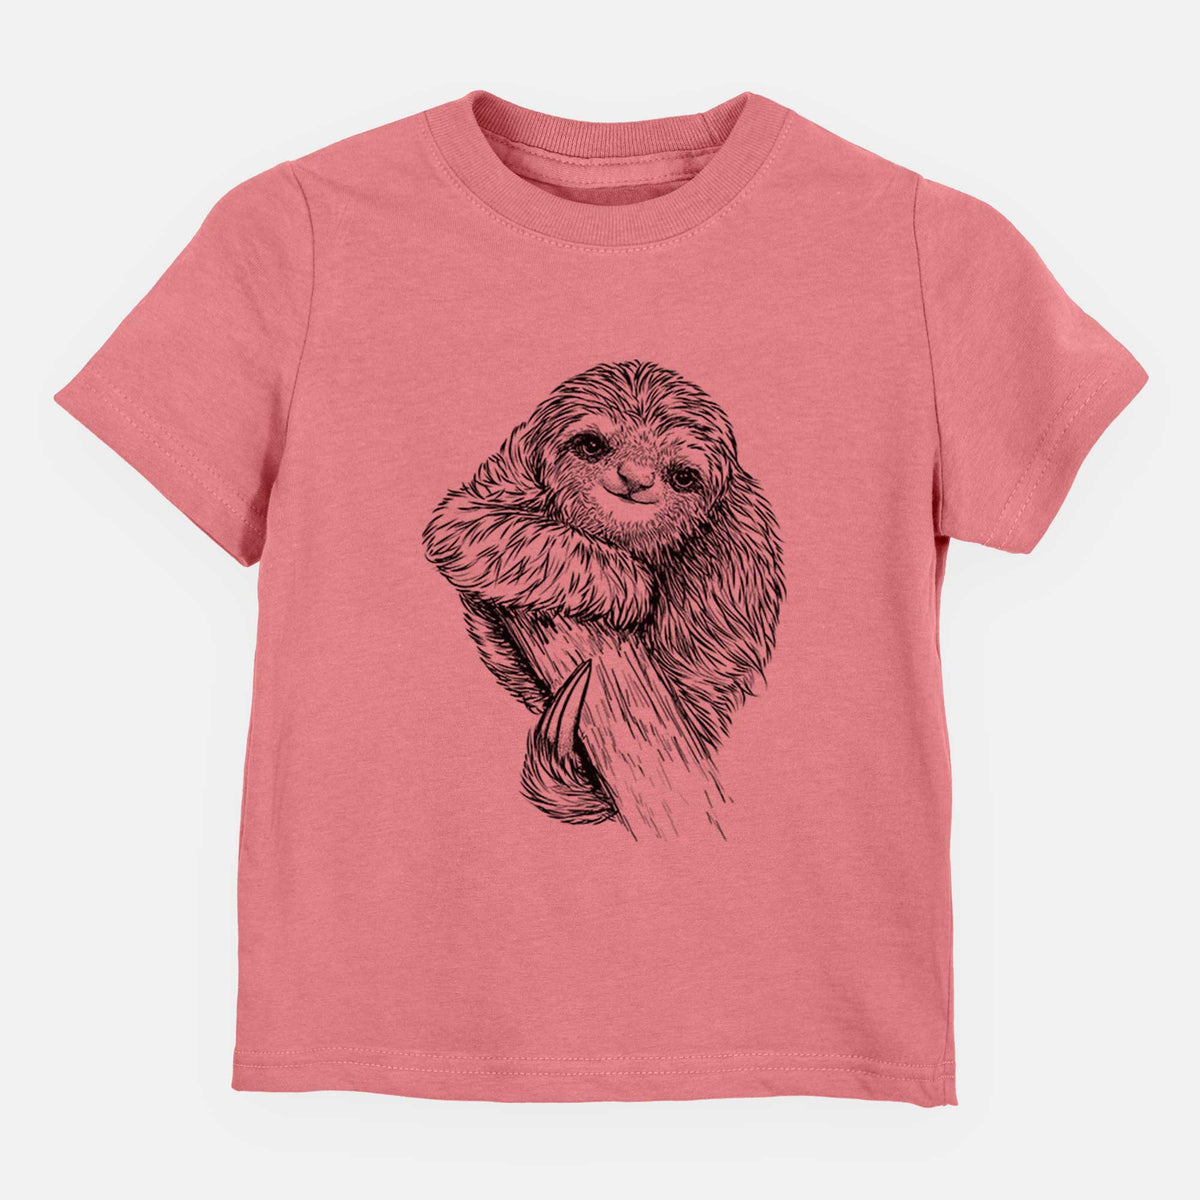 Pygmy Three-toed Sloth - Bradypus pygmaeus - Kids Shirt